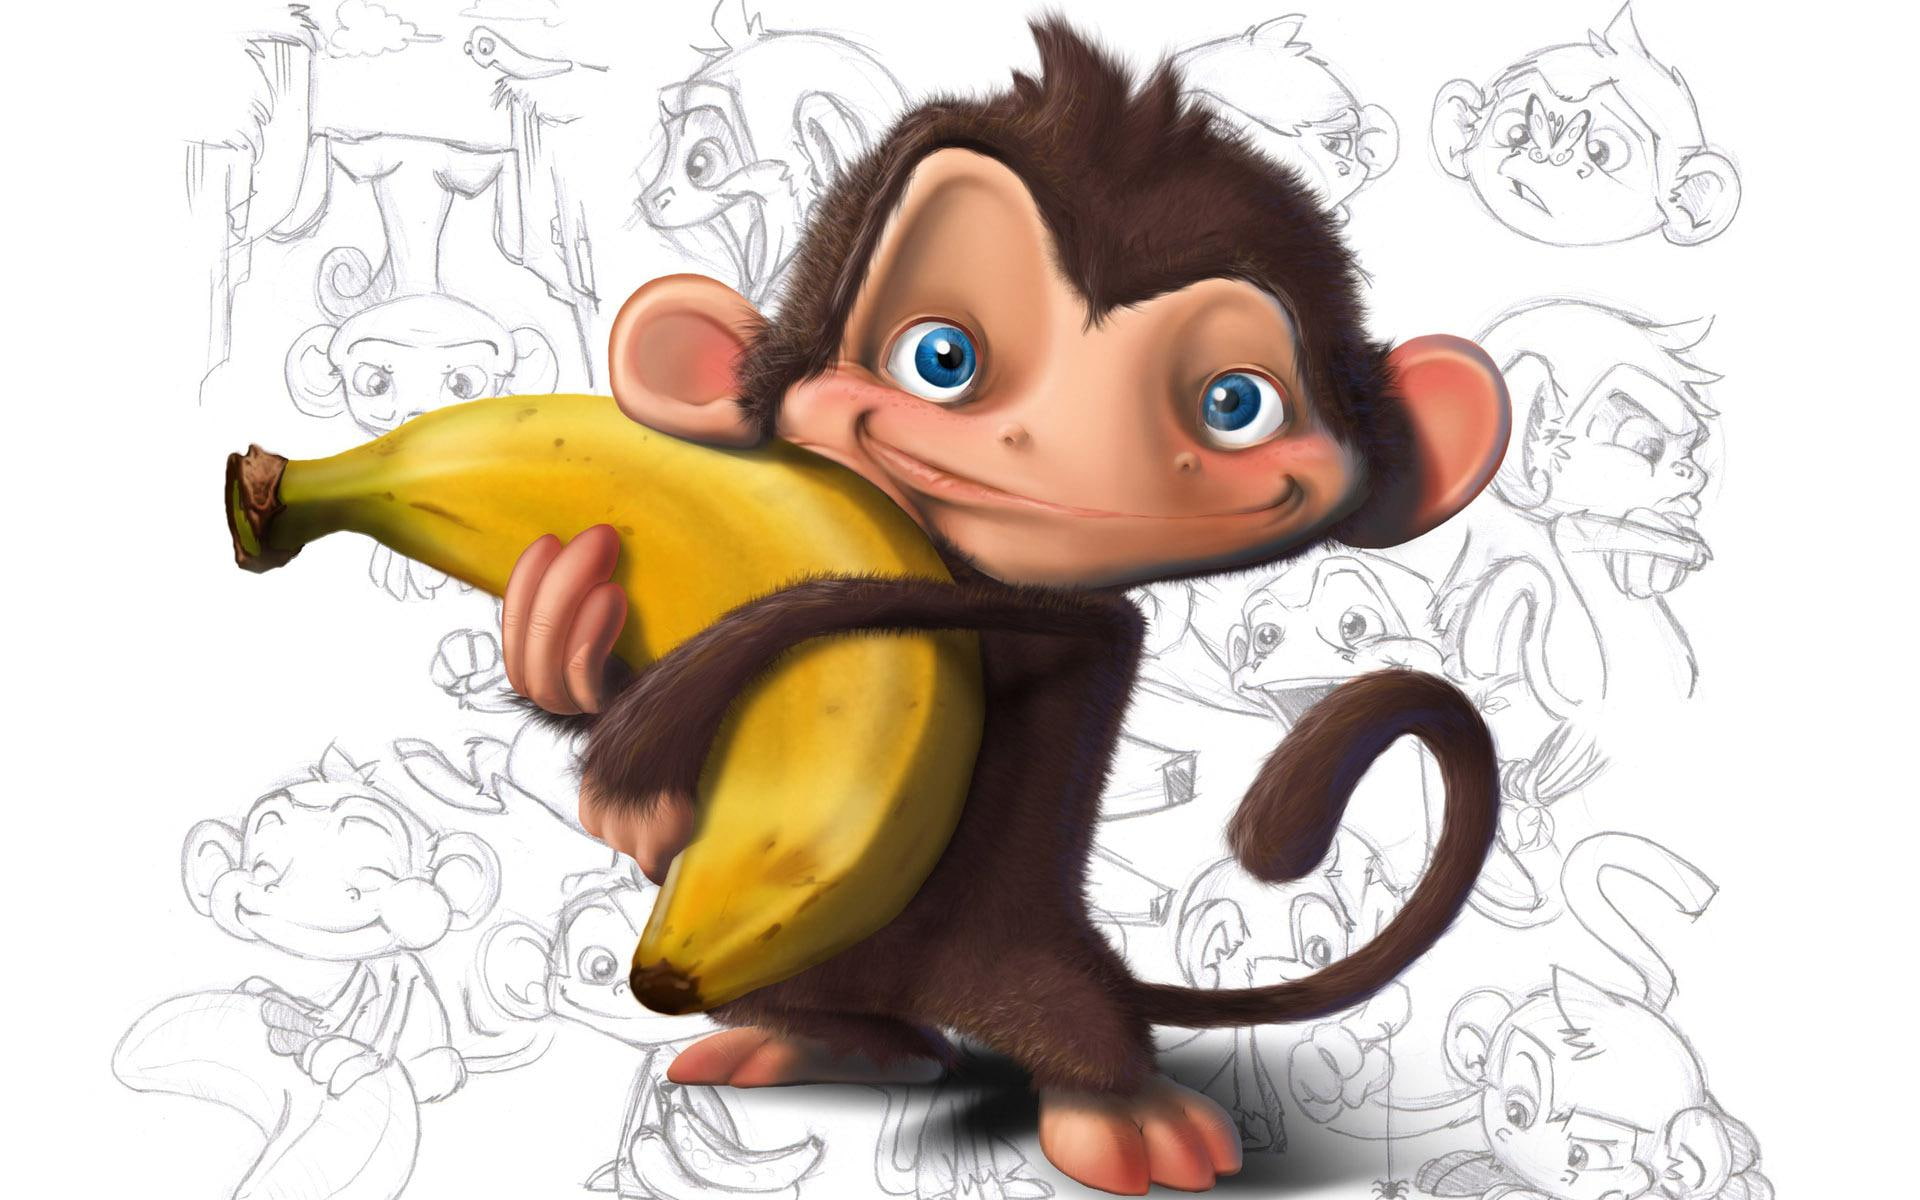 Monkey holding a banana, monkey holding yellow banana illustration